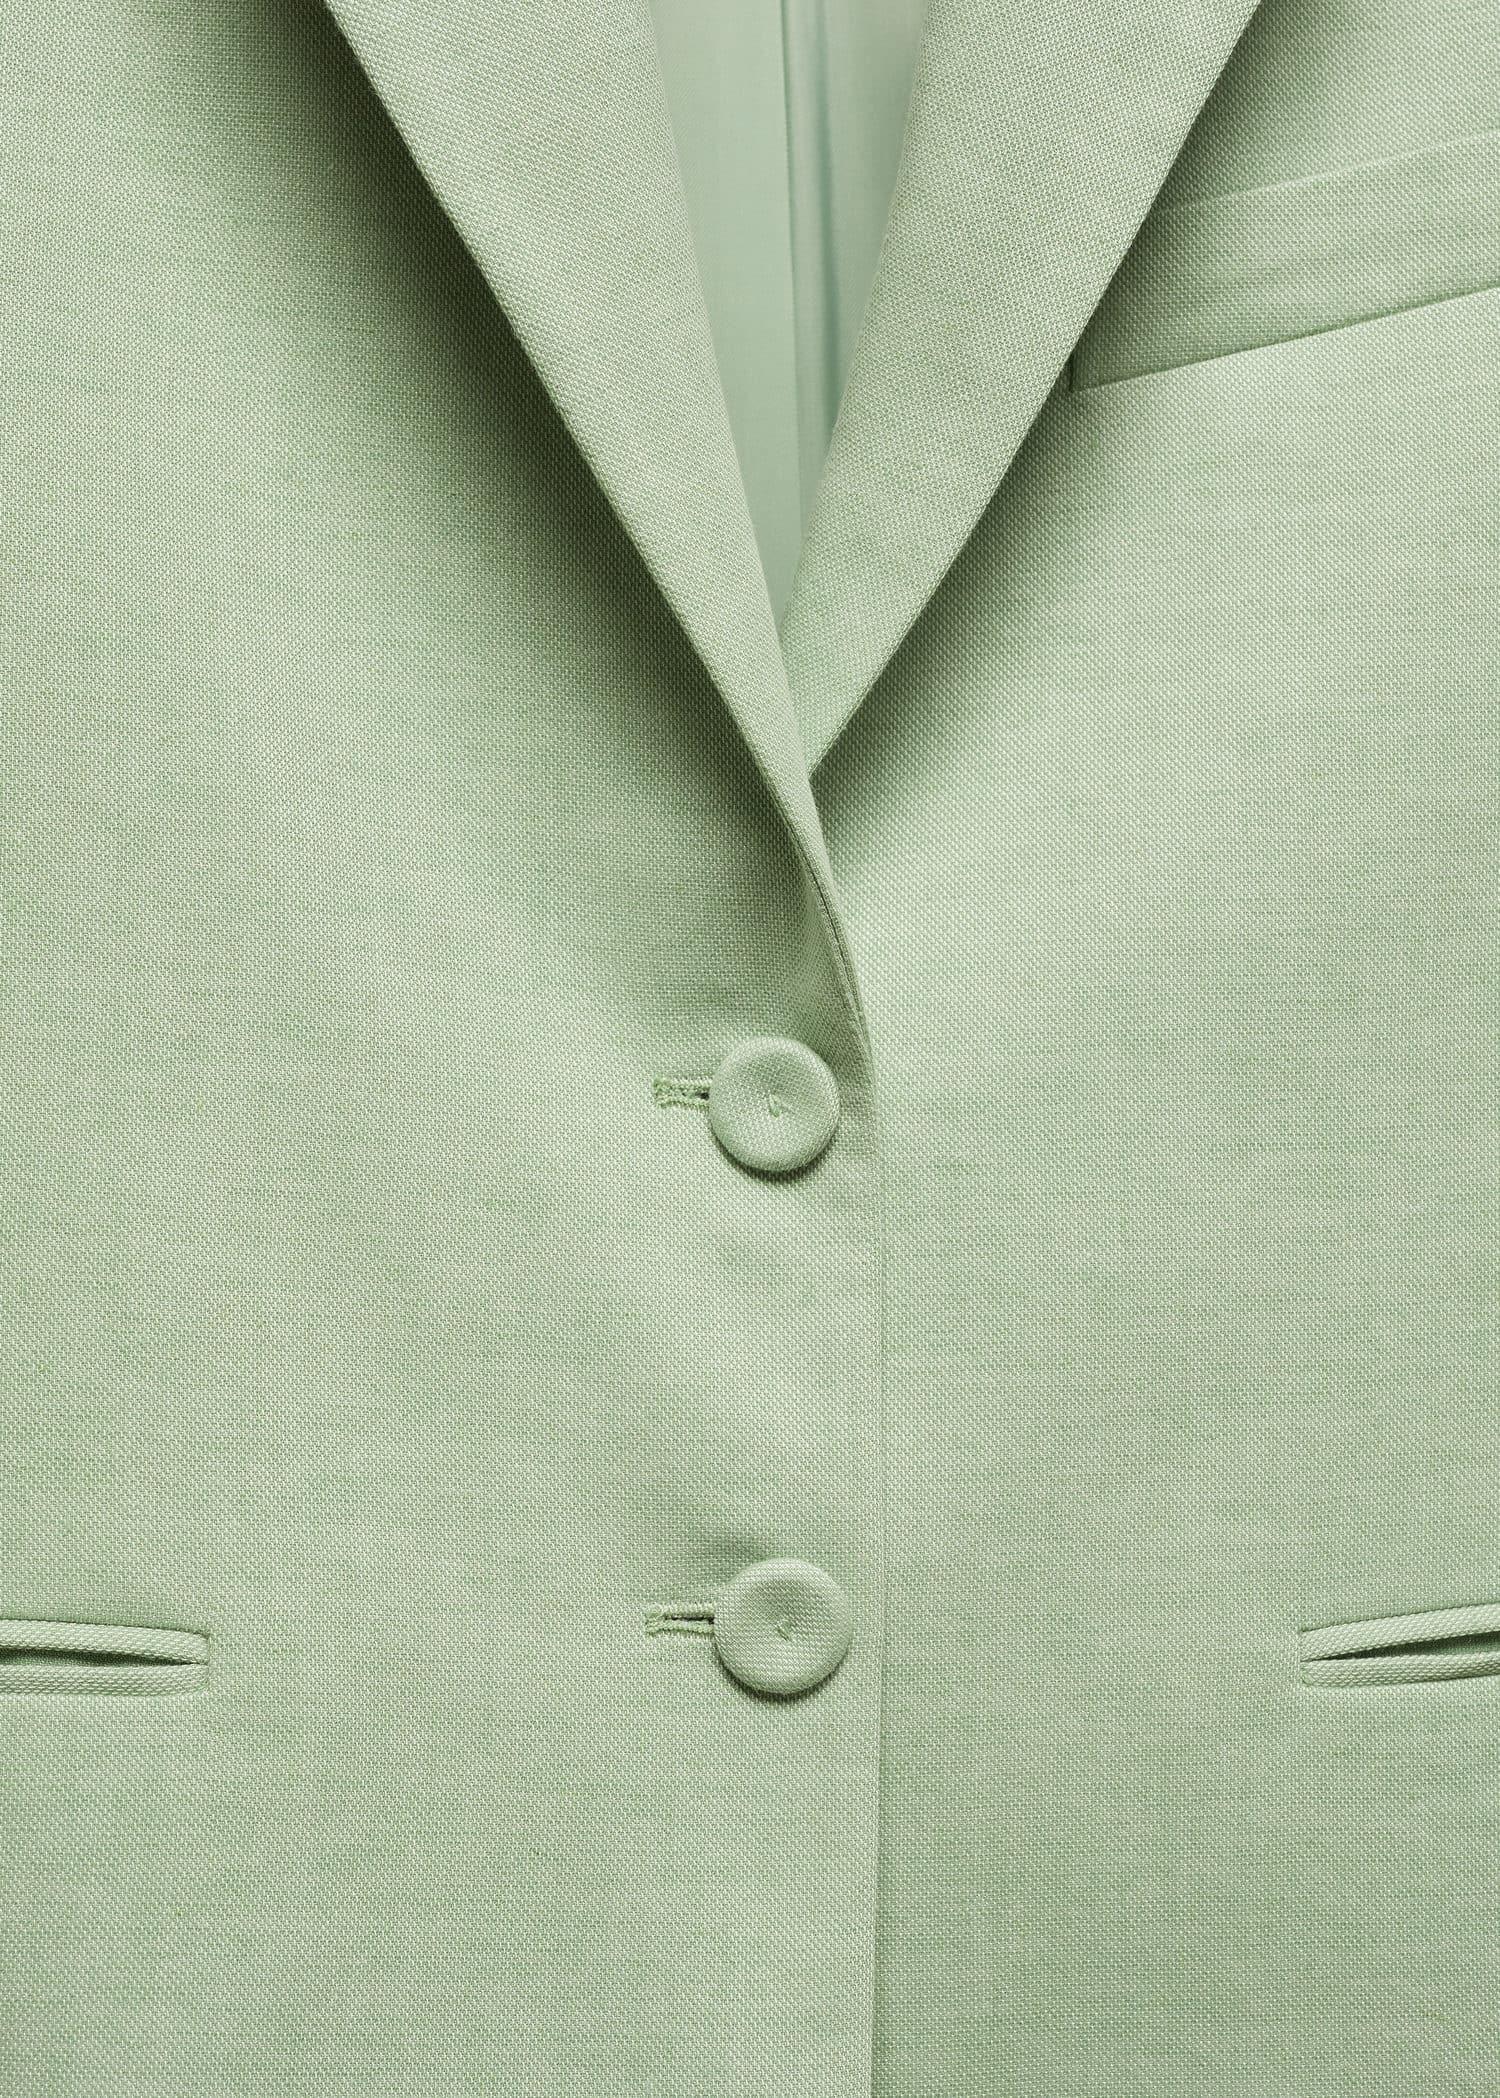 Mango - Green Cropped Buttoned Blazer